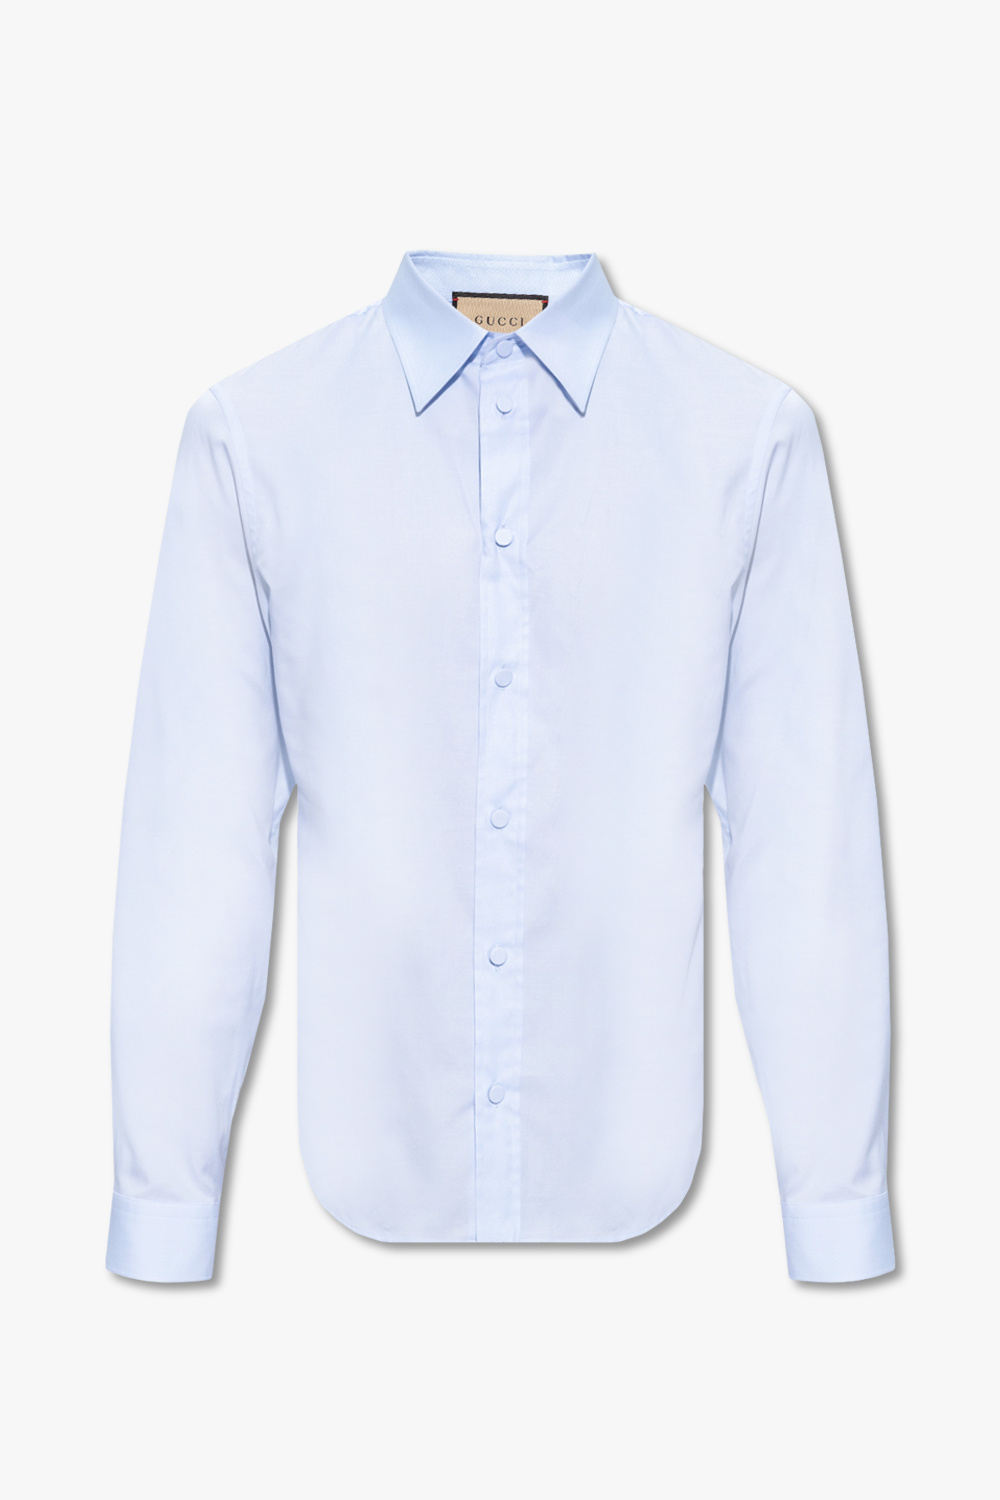 Gucci Cotton shirt with tie neck | Men's Clothing | Vitkac